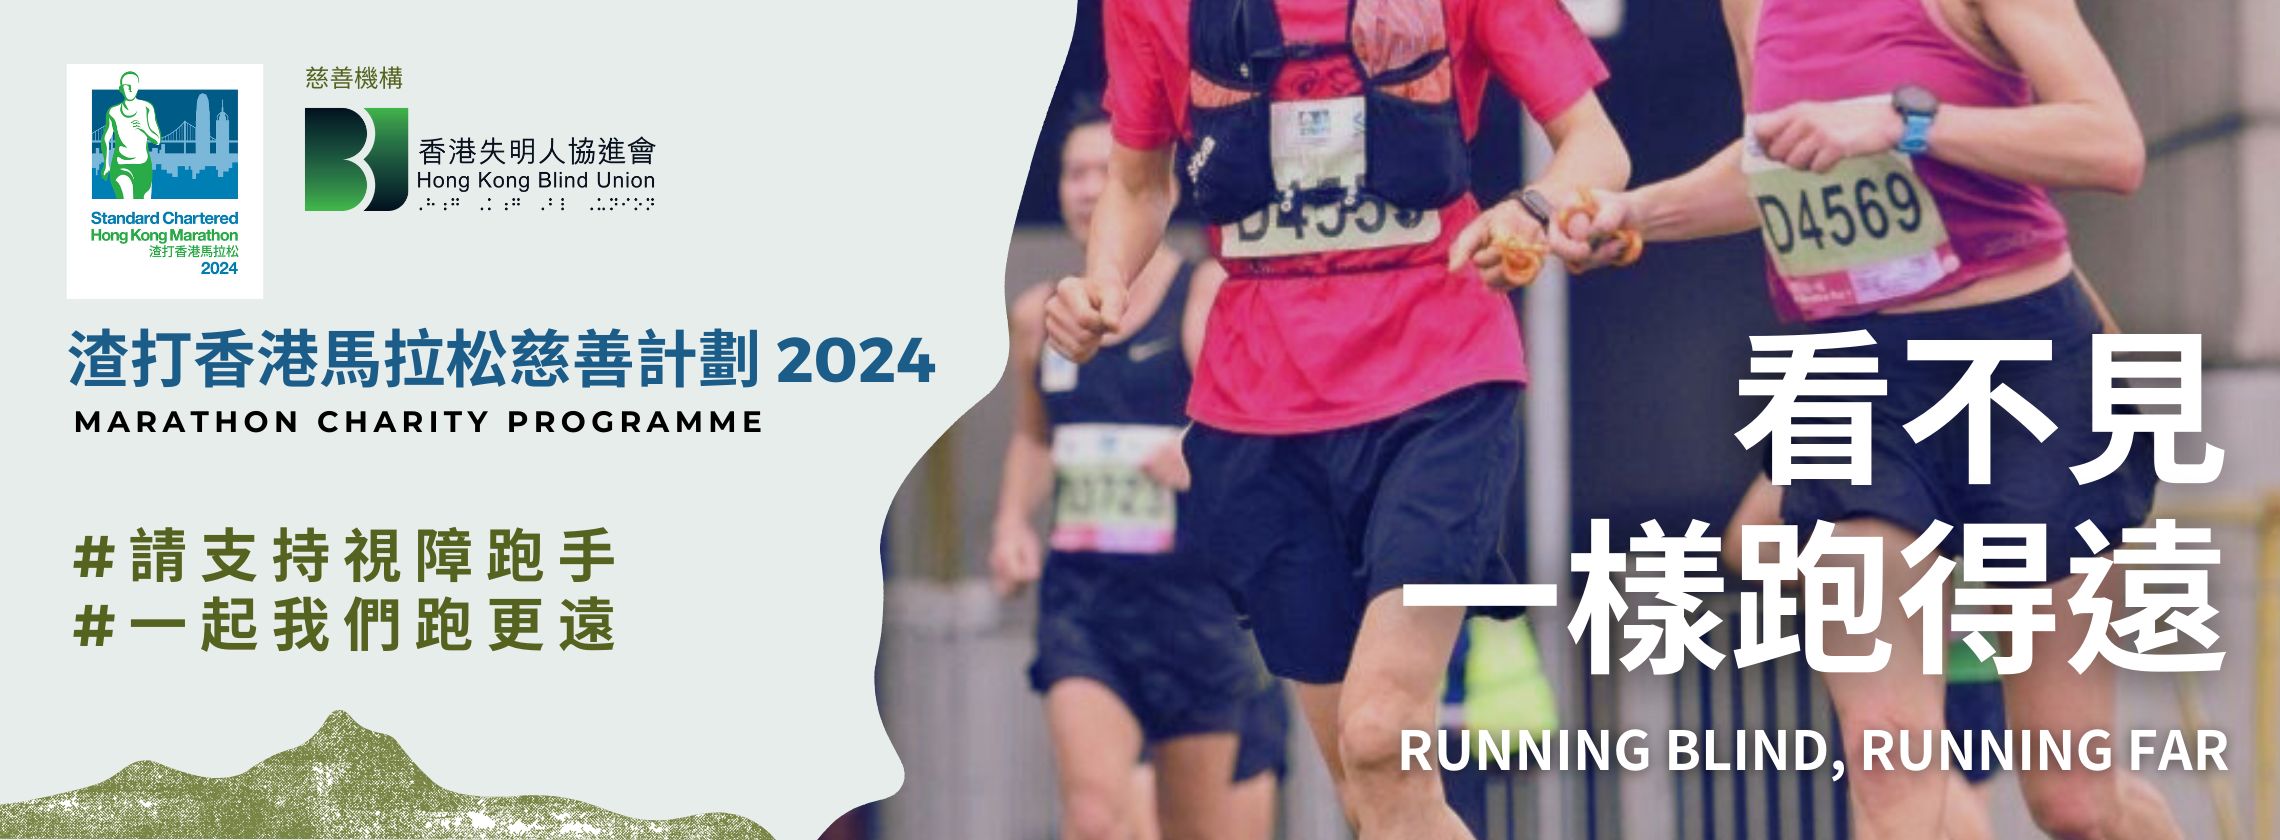 Marathon Charity Programme 2024